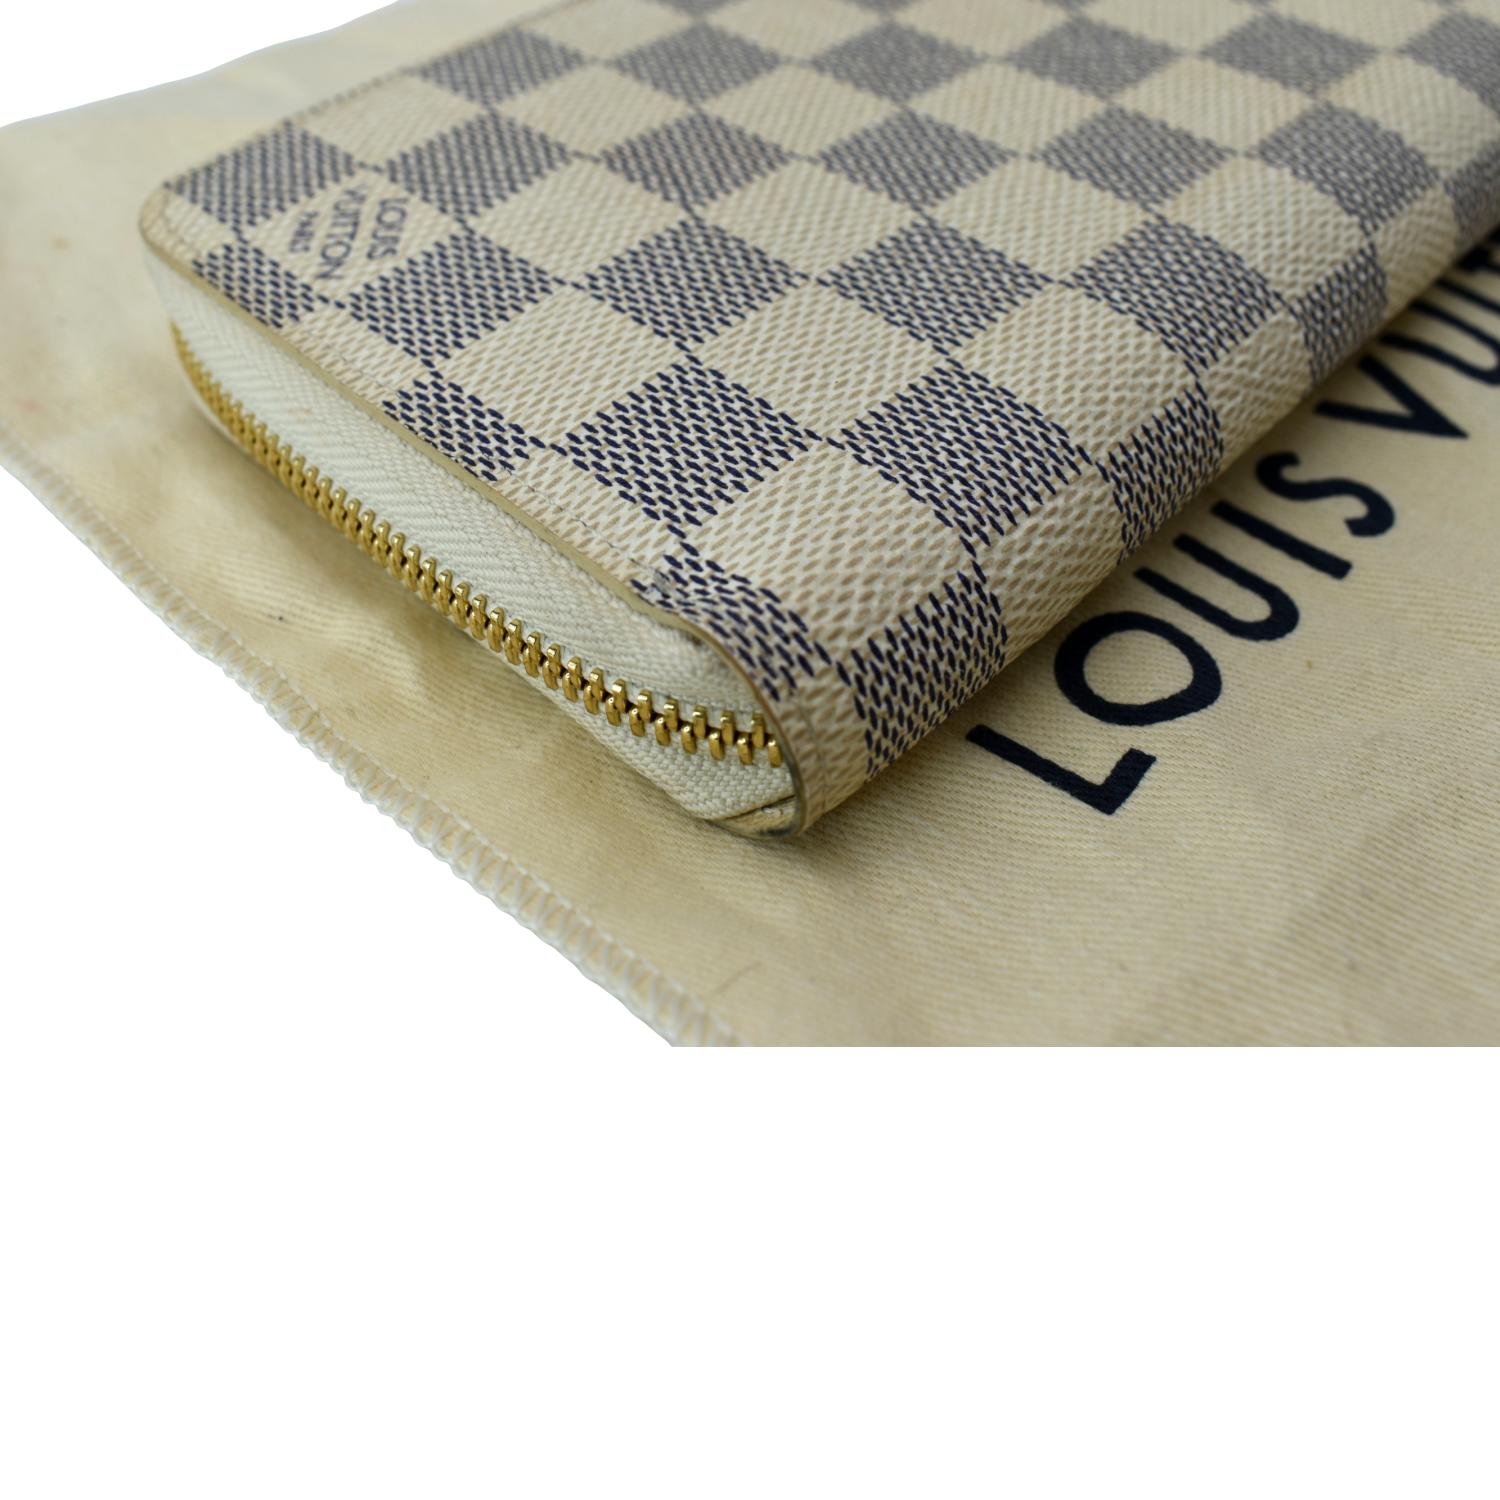 LV White Checker 2 Sided Wallet w/ Zipper